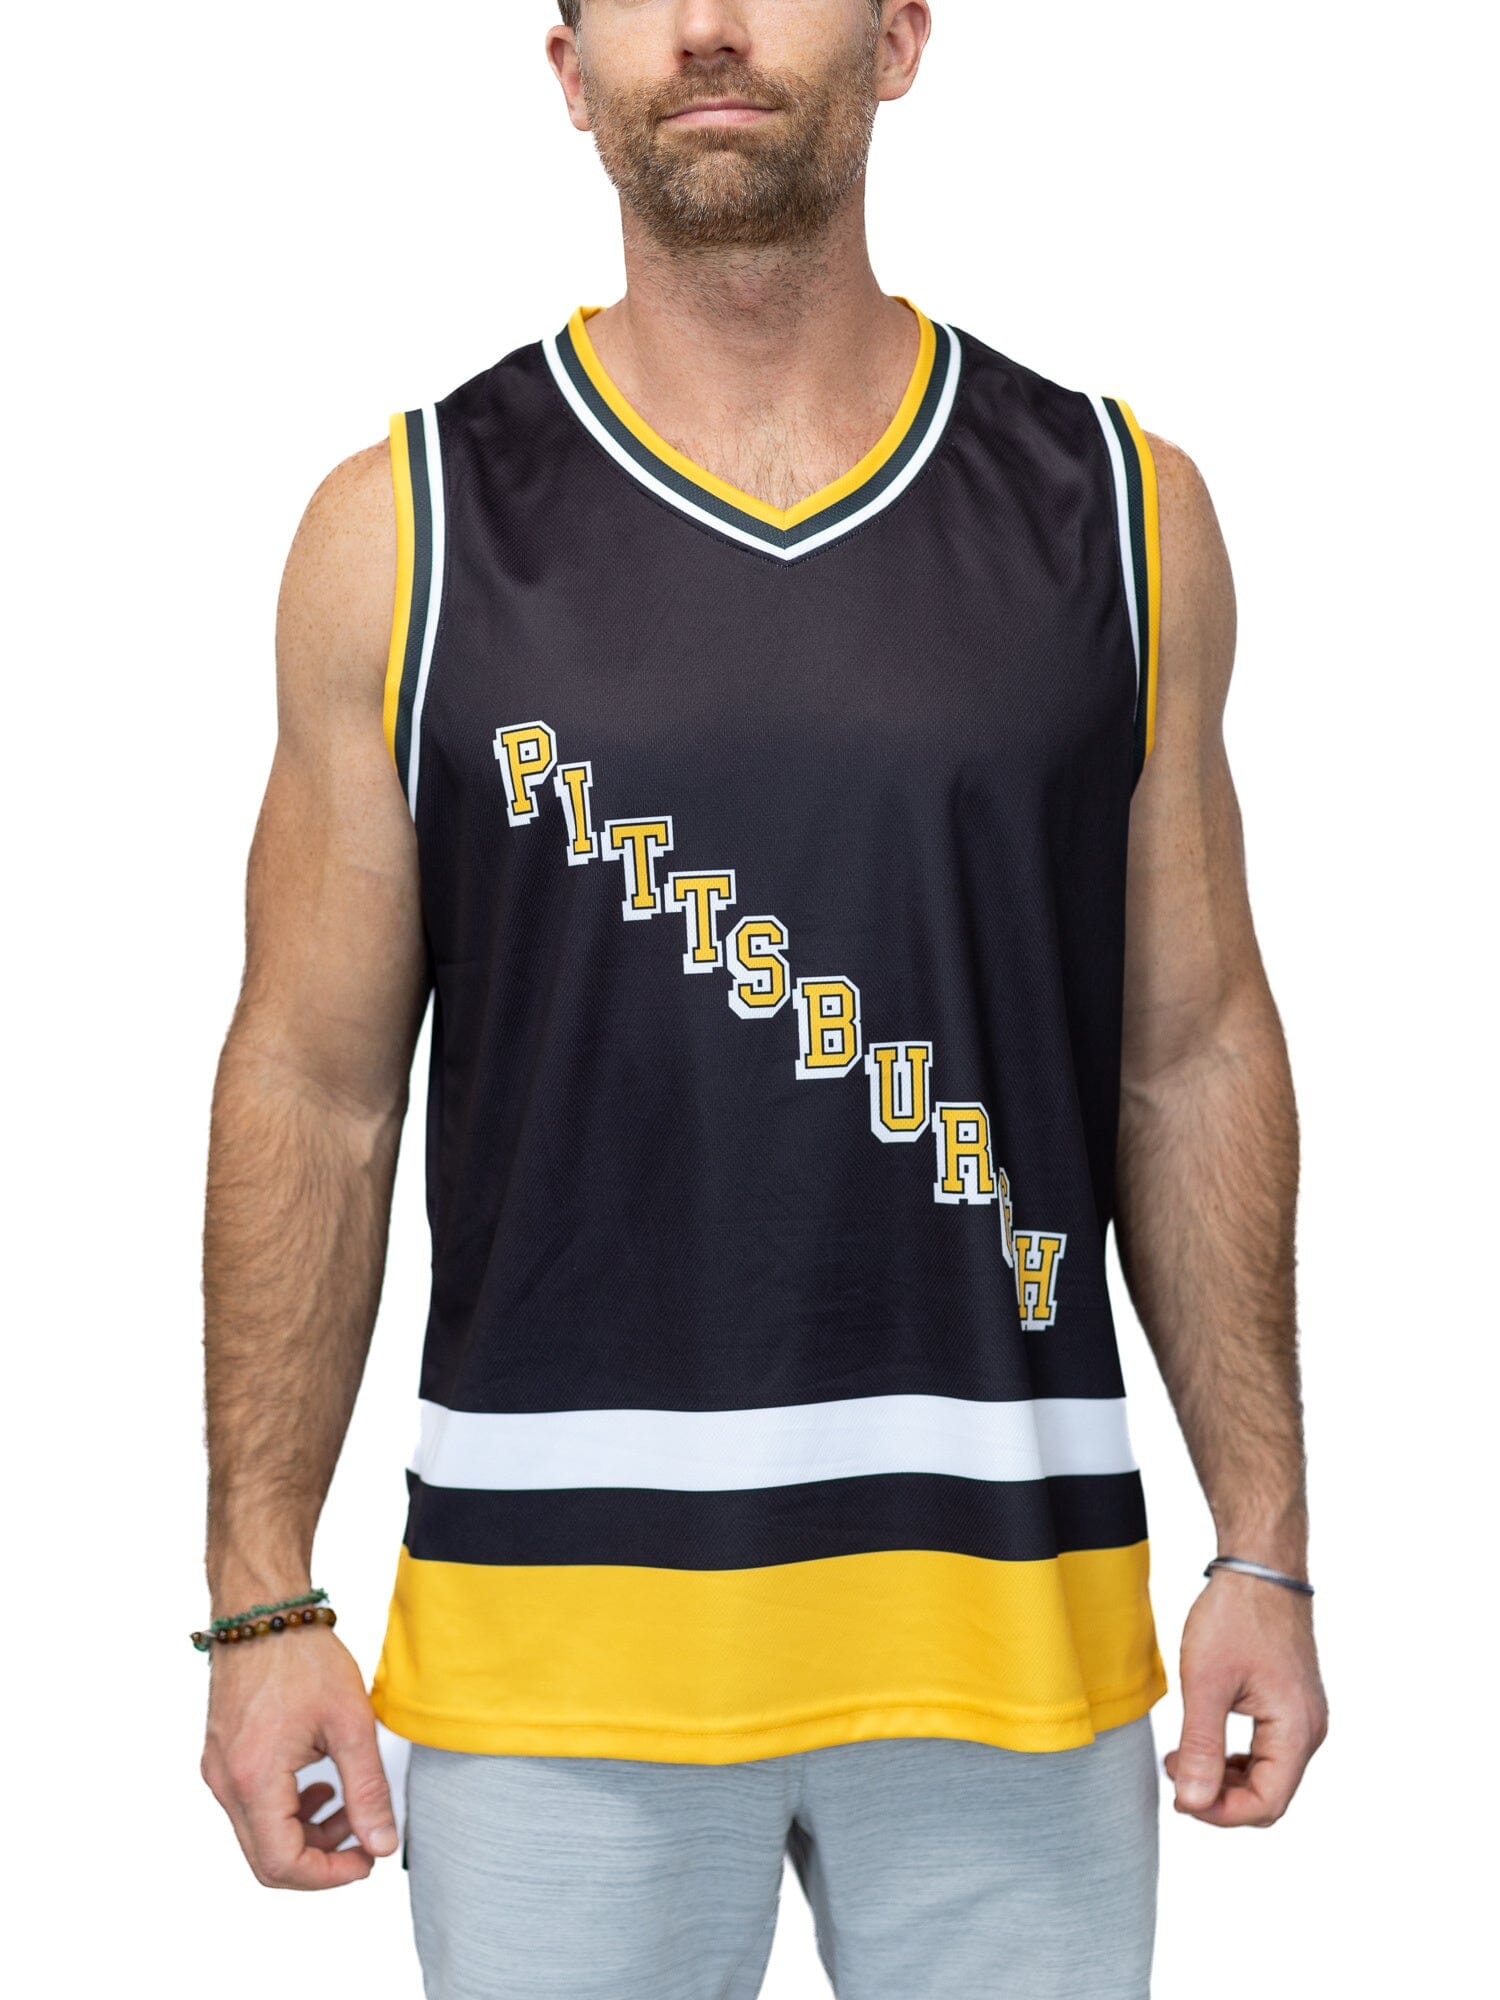 Buy jersey Golden State Warriors Black Sleeved Alternate